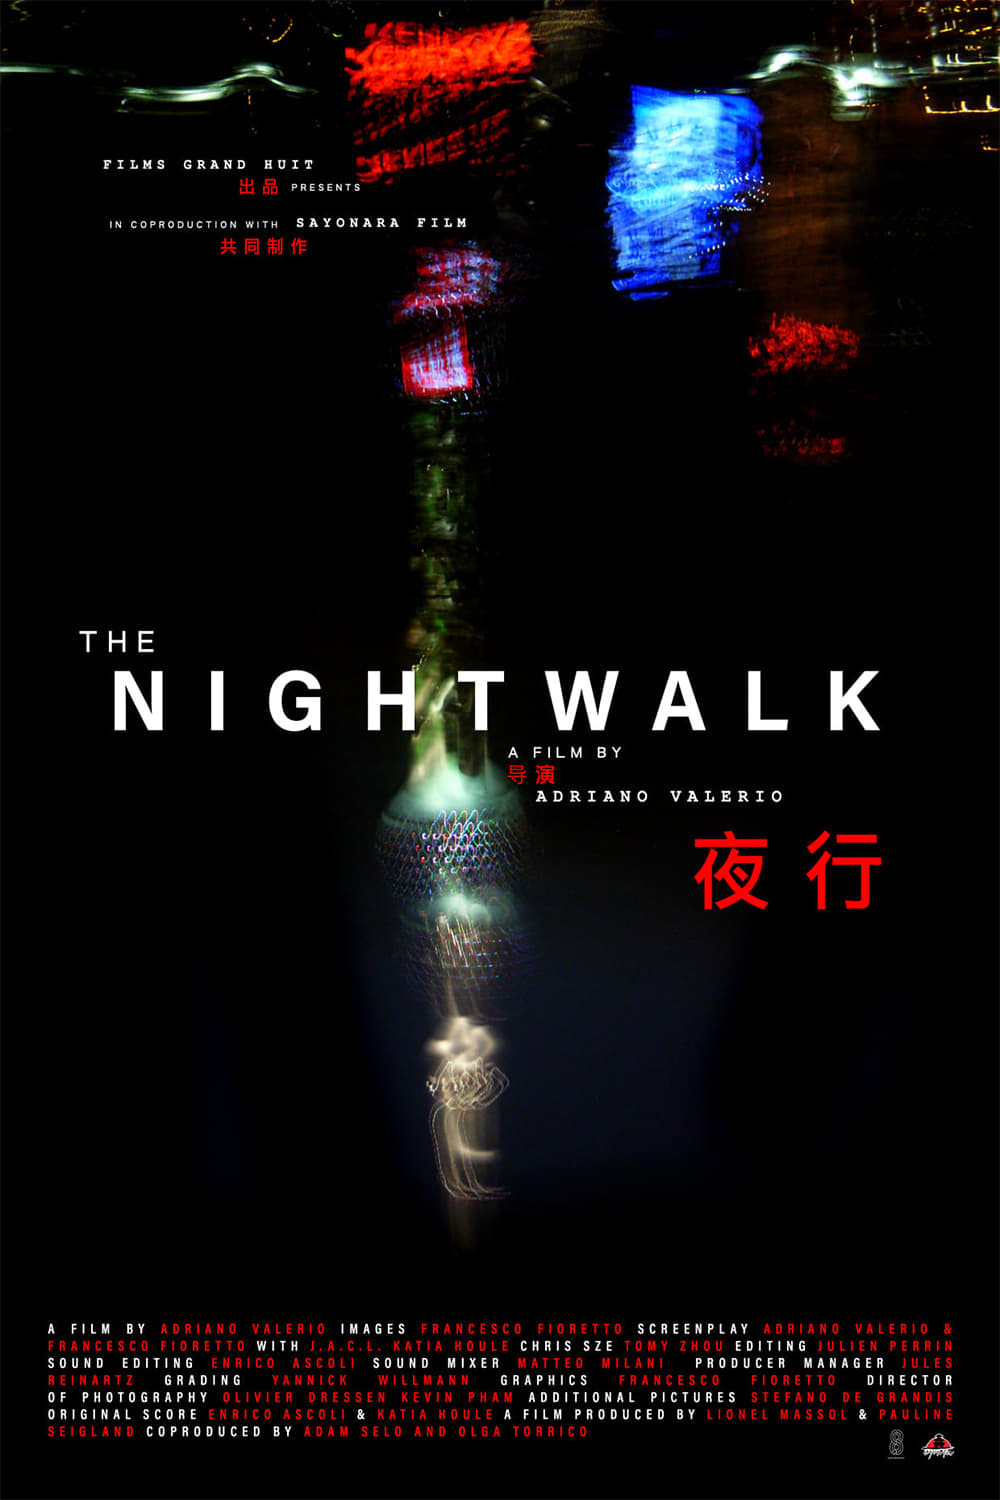 The Nightwalk